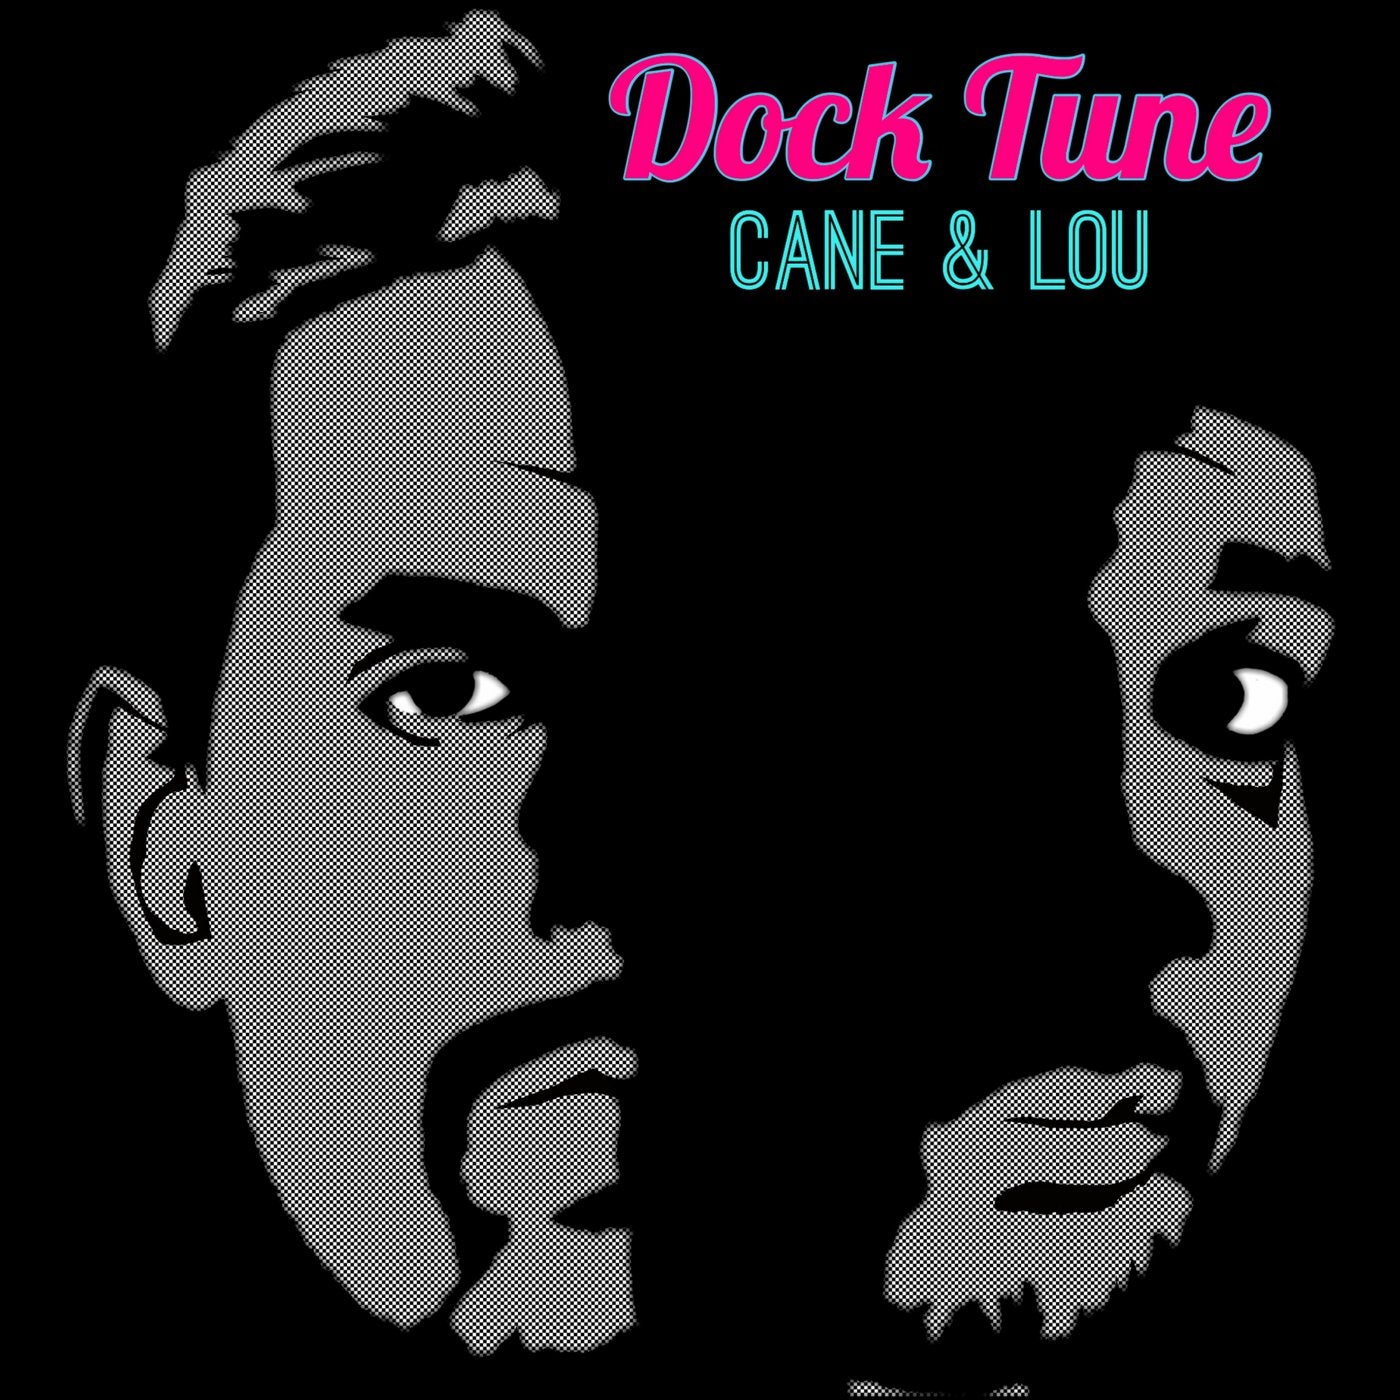 Dock Tune